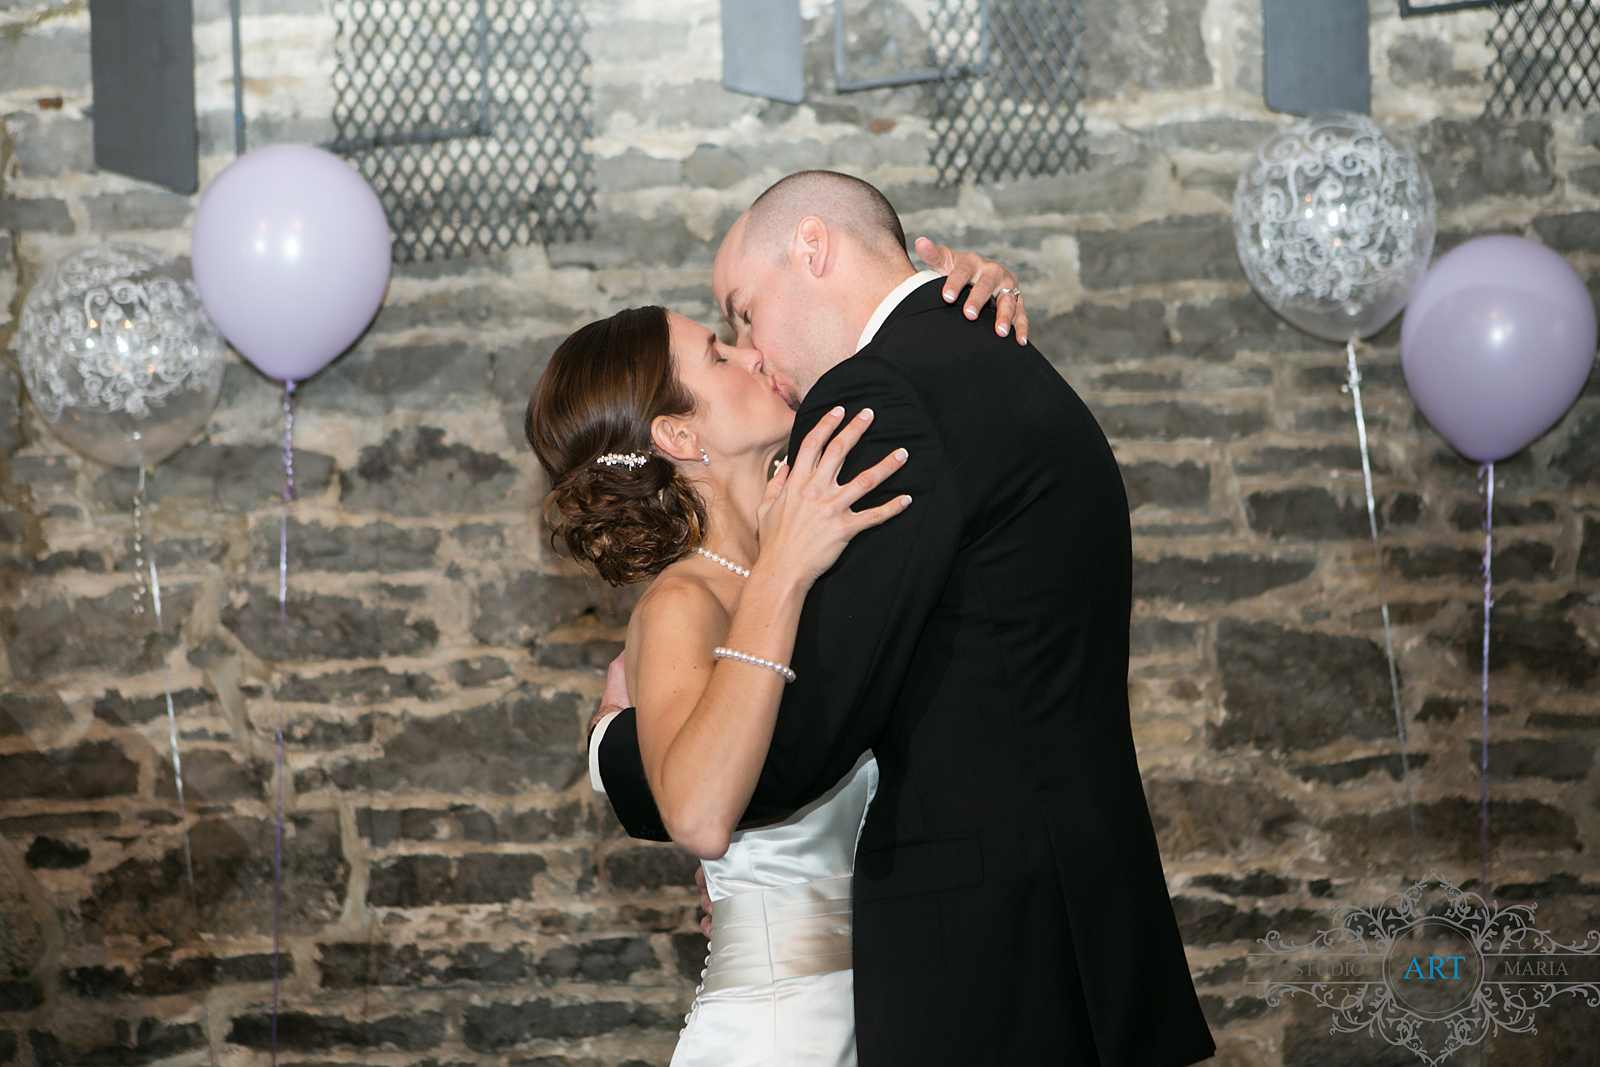 https://www.ottawaweddingmagazine.com/wp-content/uploads/2013/11/wedding-pictures-422.jpg